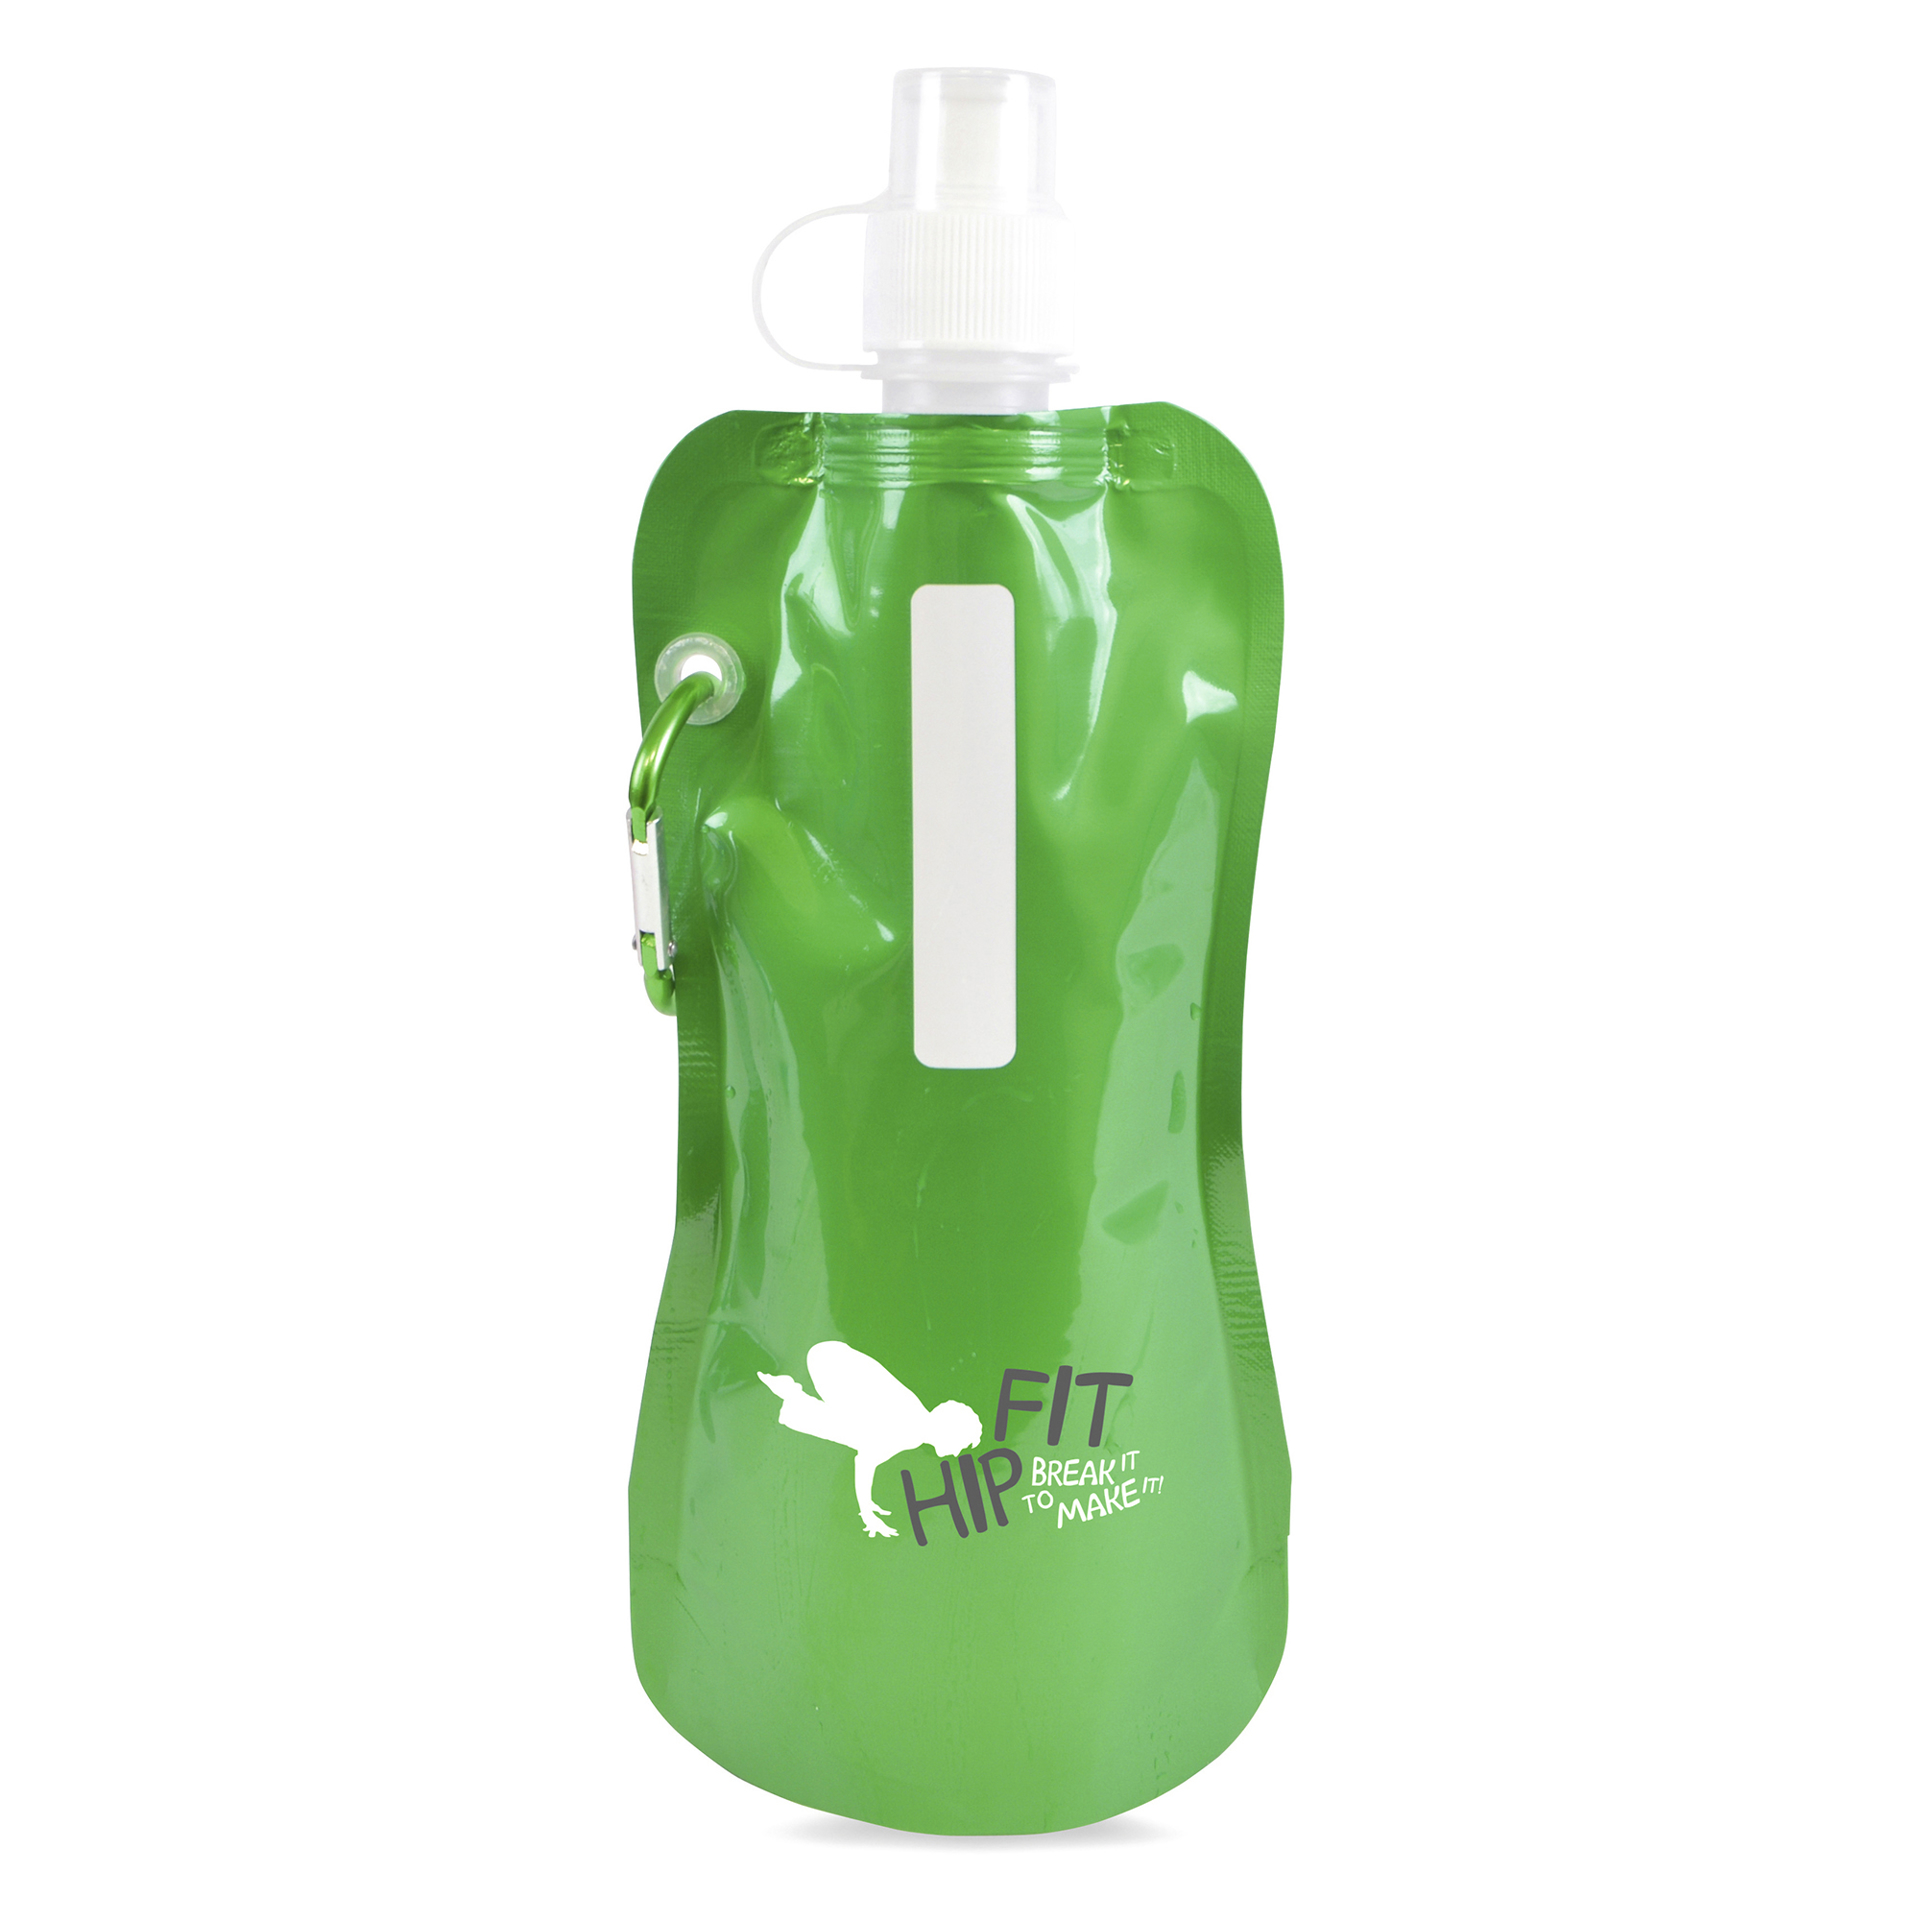 Green folding drinks bottle with matching metallic carabiner hook